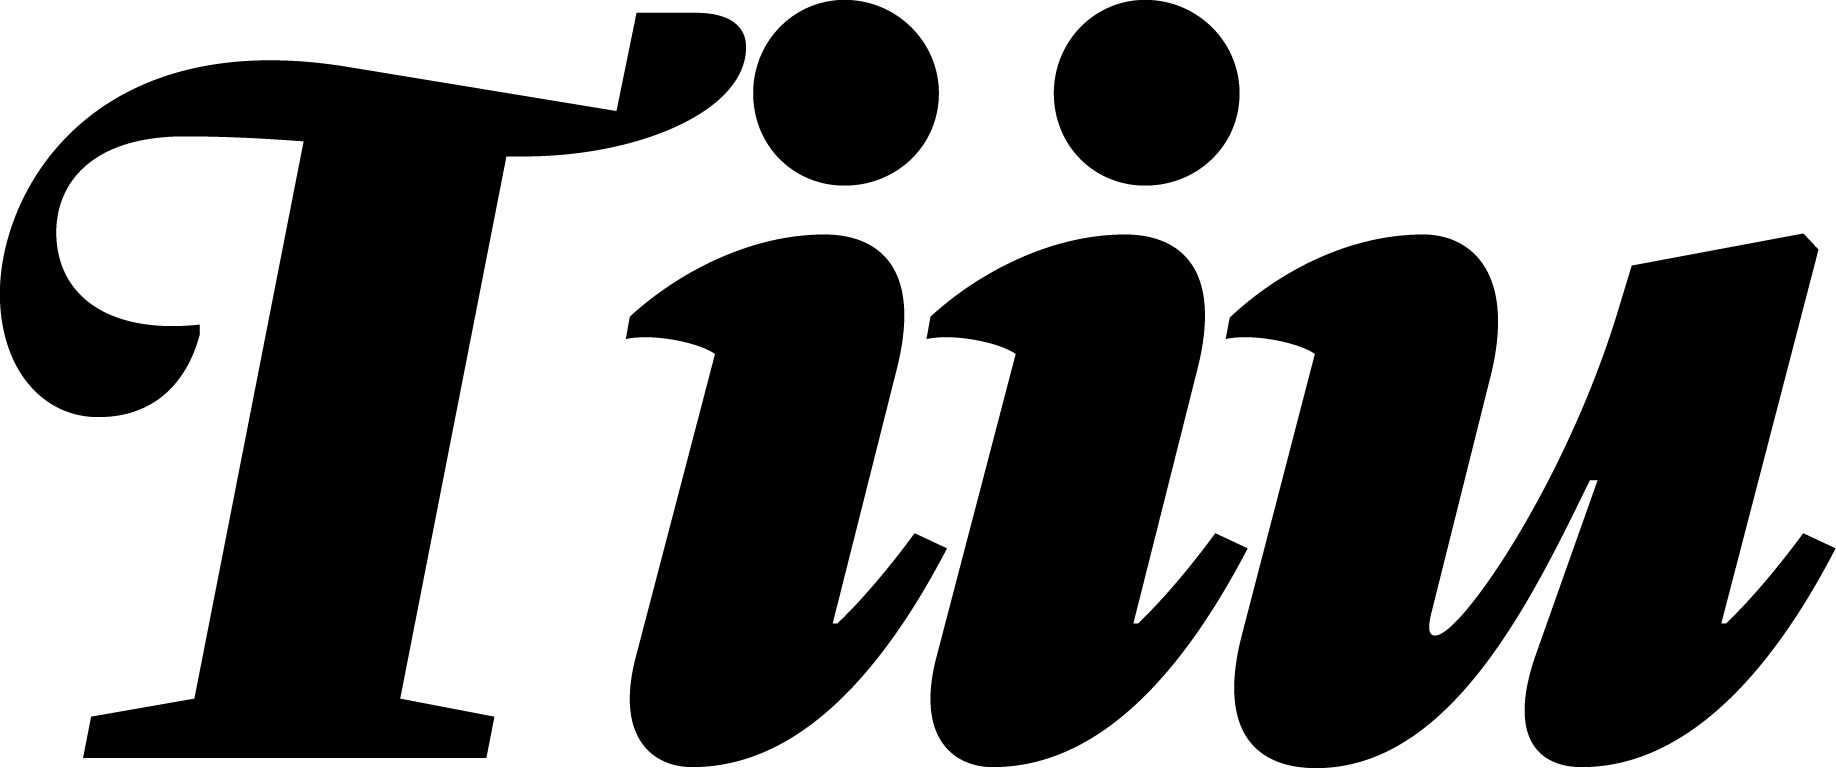 Ajakiri Tiiu logo